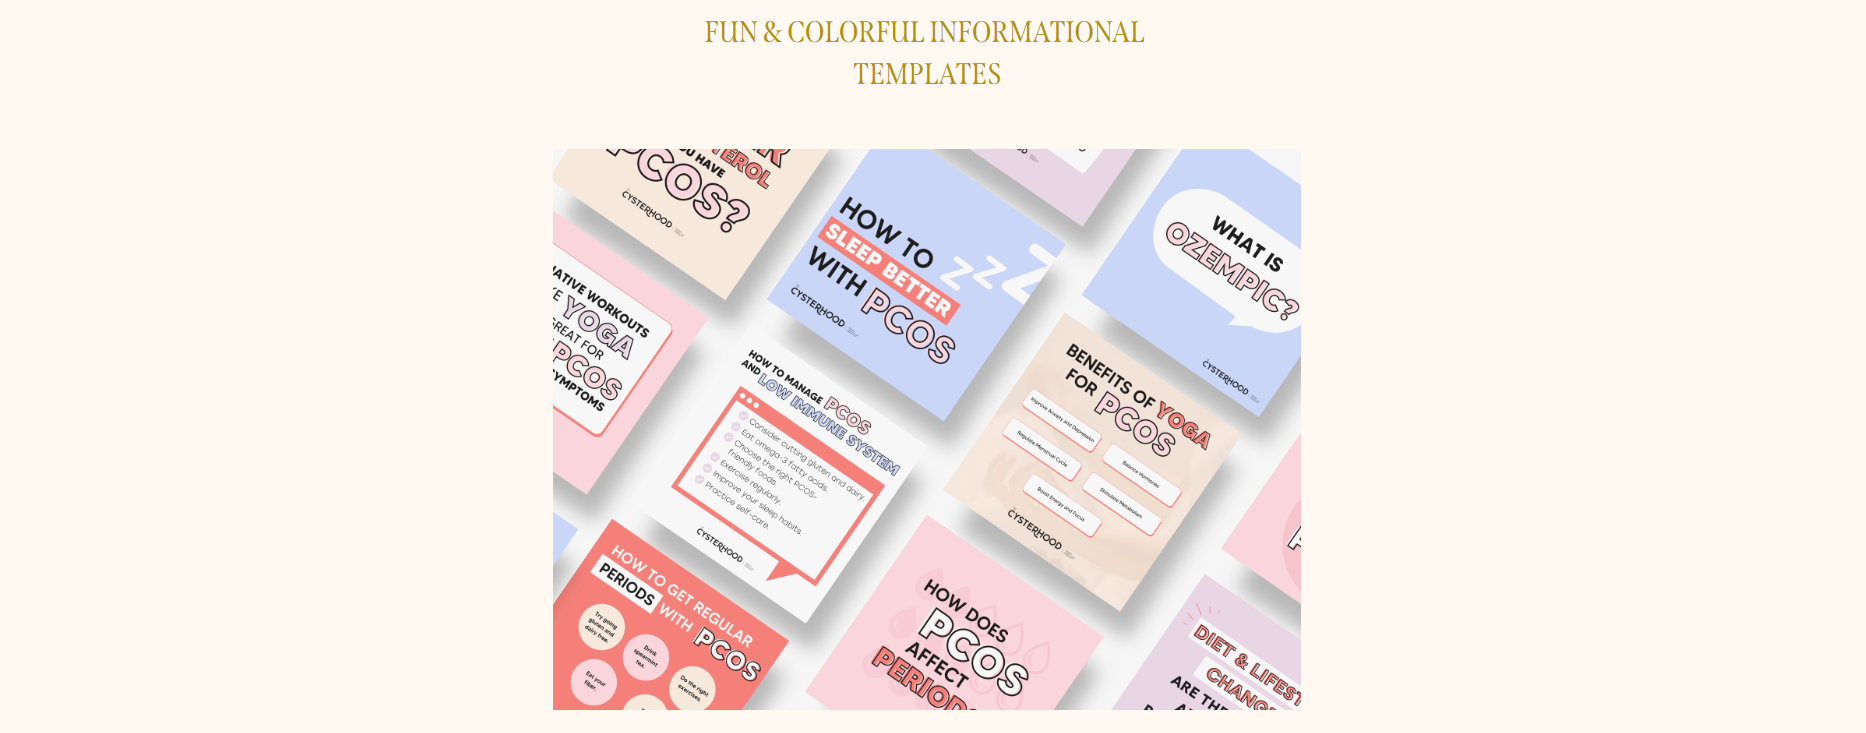 Fun & Colorful Informative Templates Design